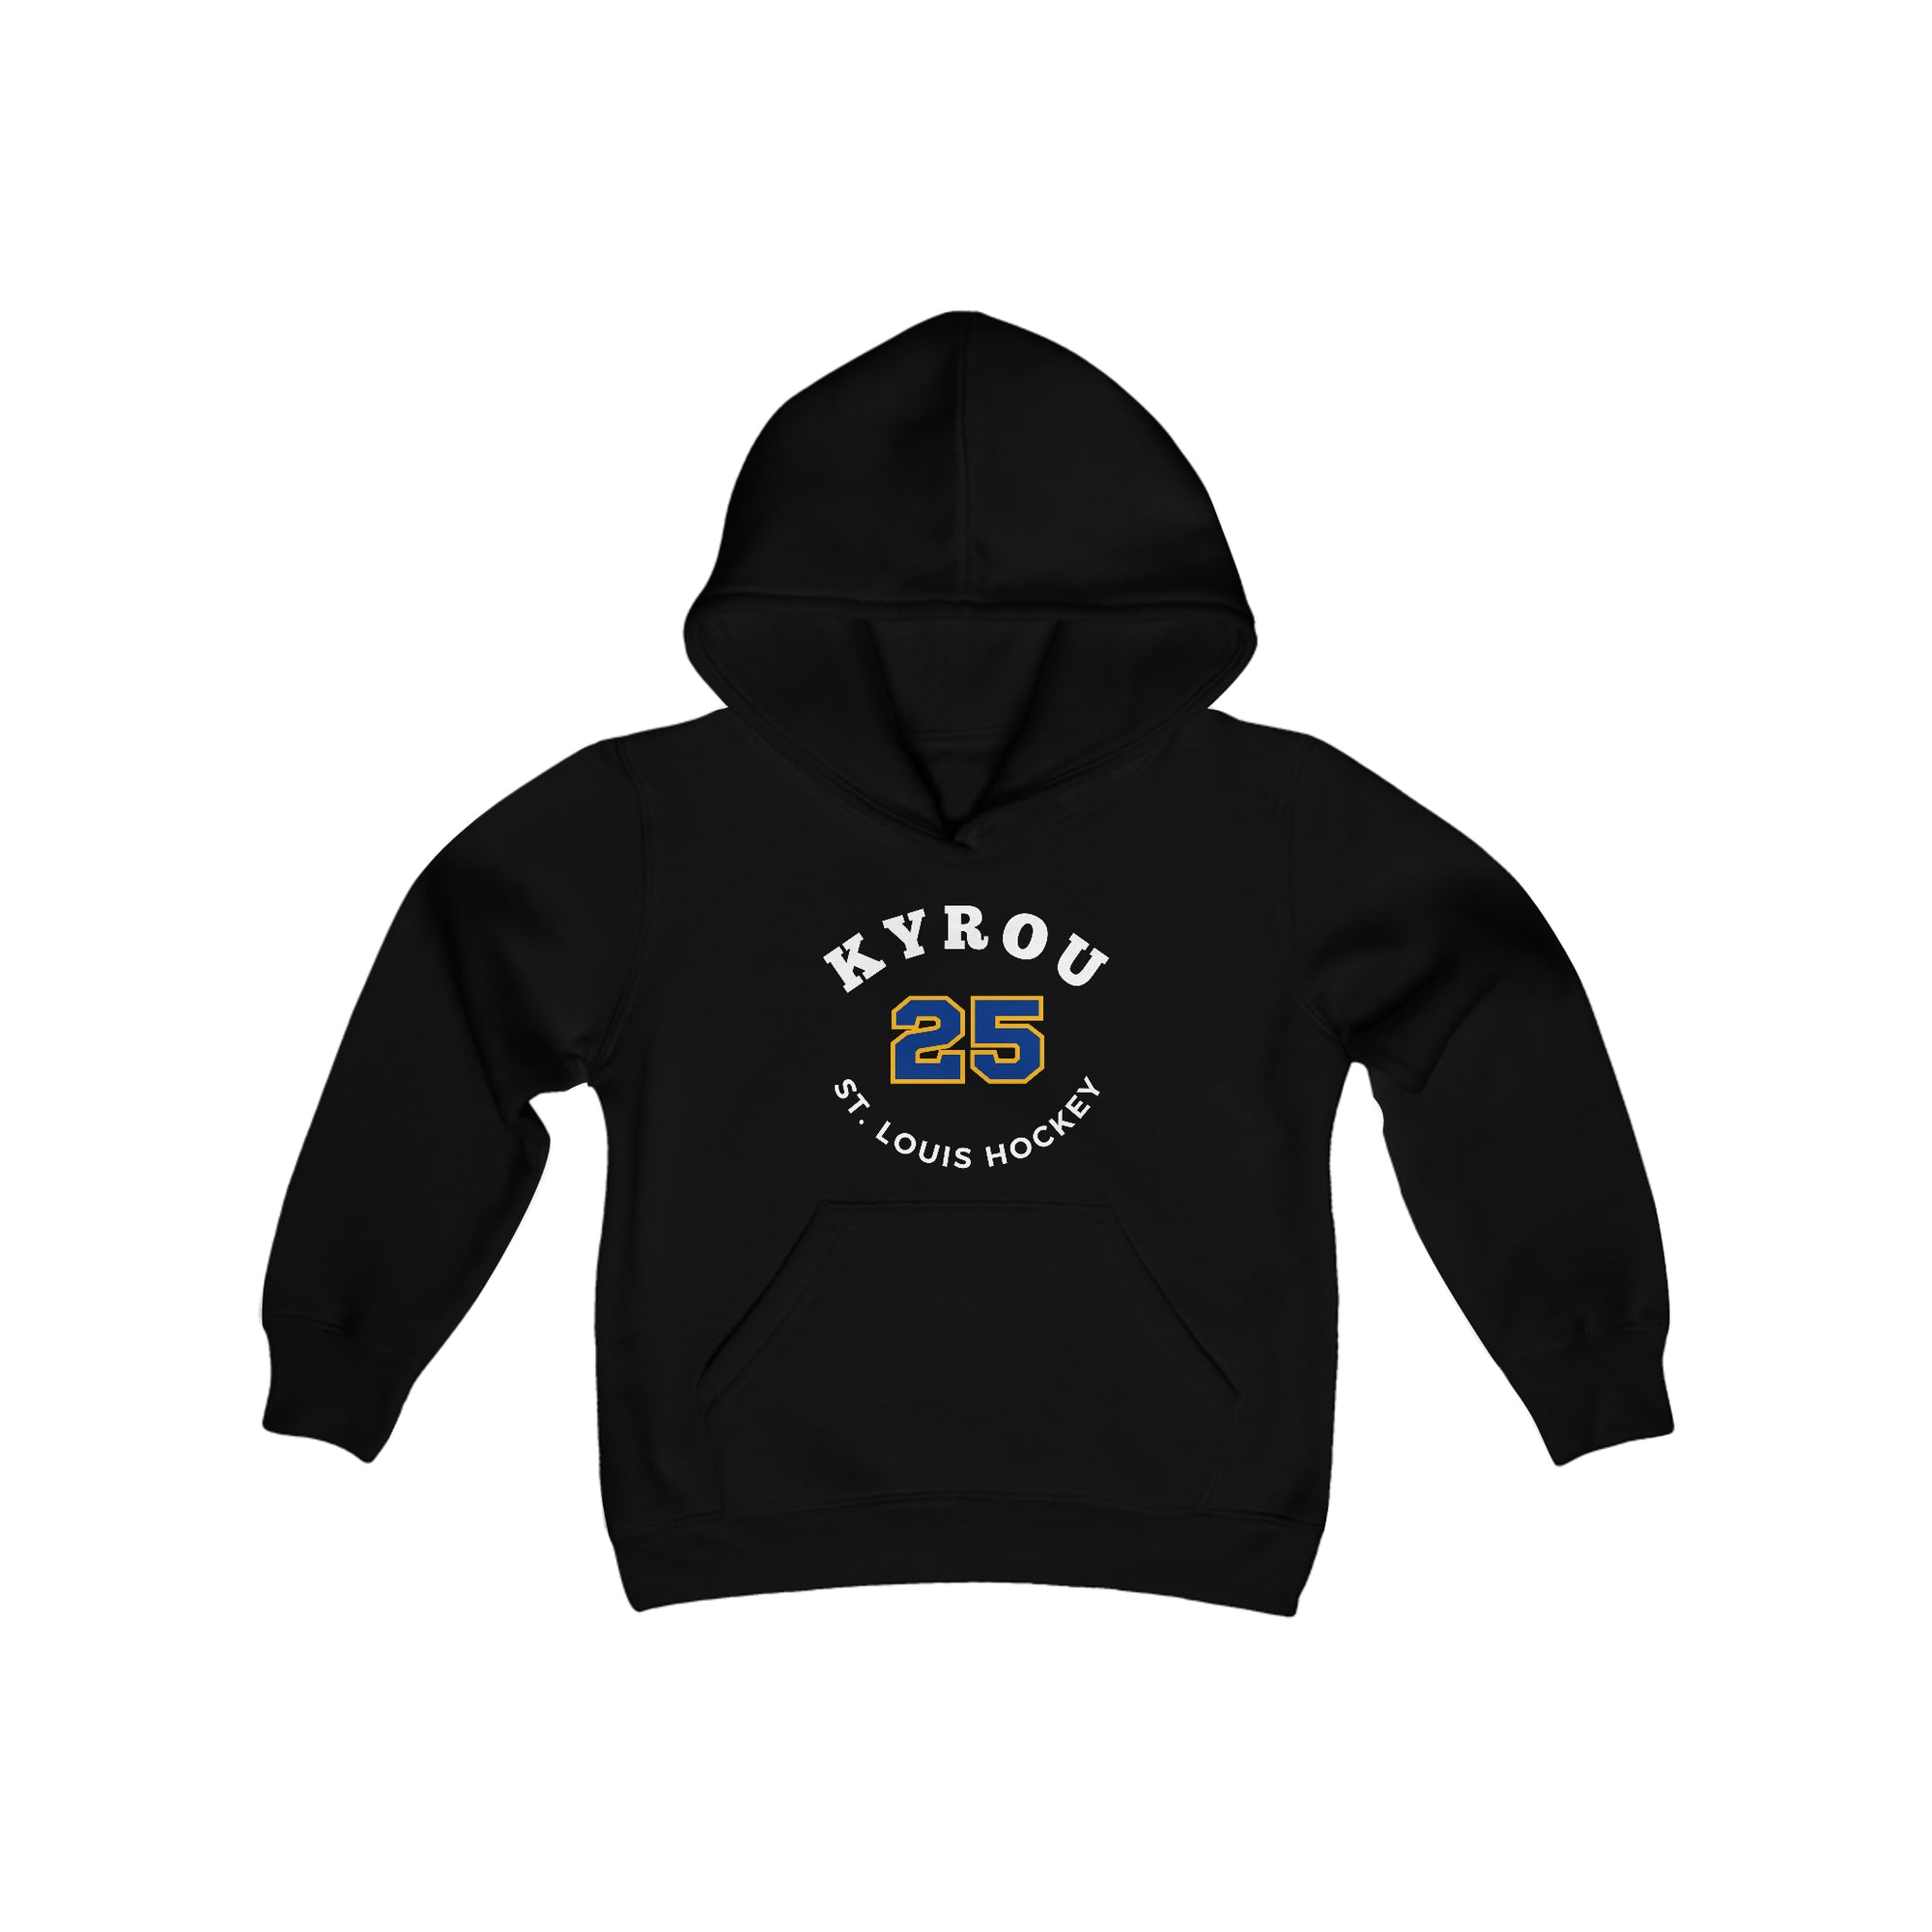 Kyrou 25 St. Louis Hockey Number Arch Design Youth Hooded Sweatshirt